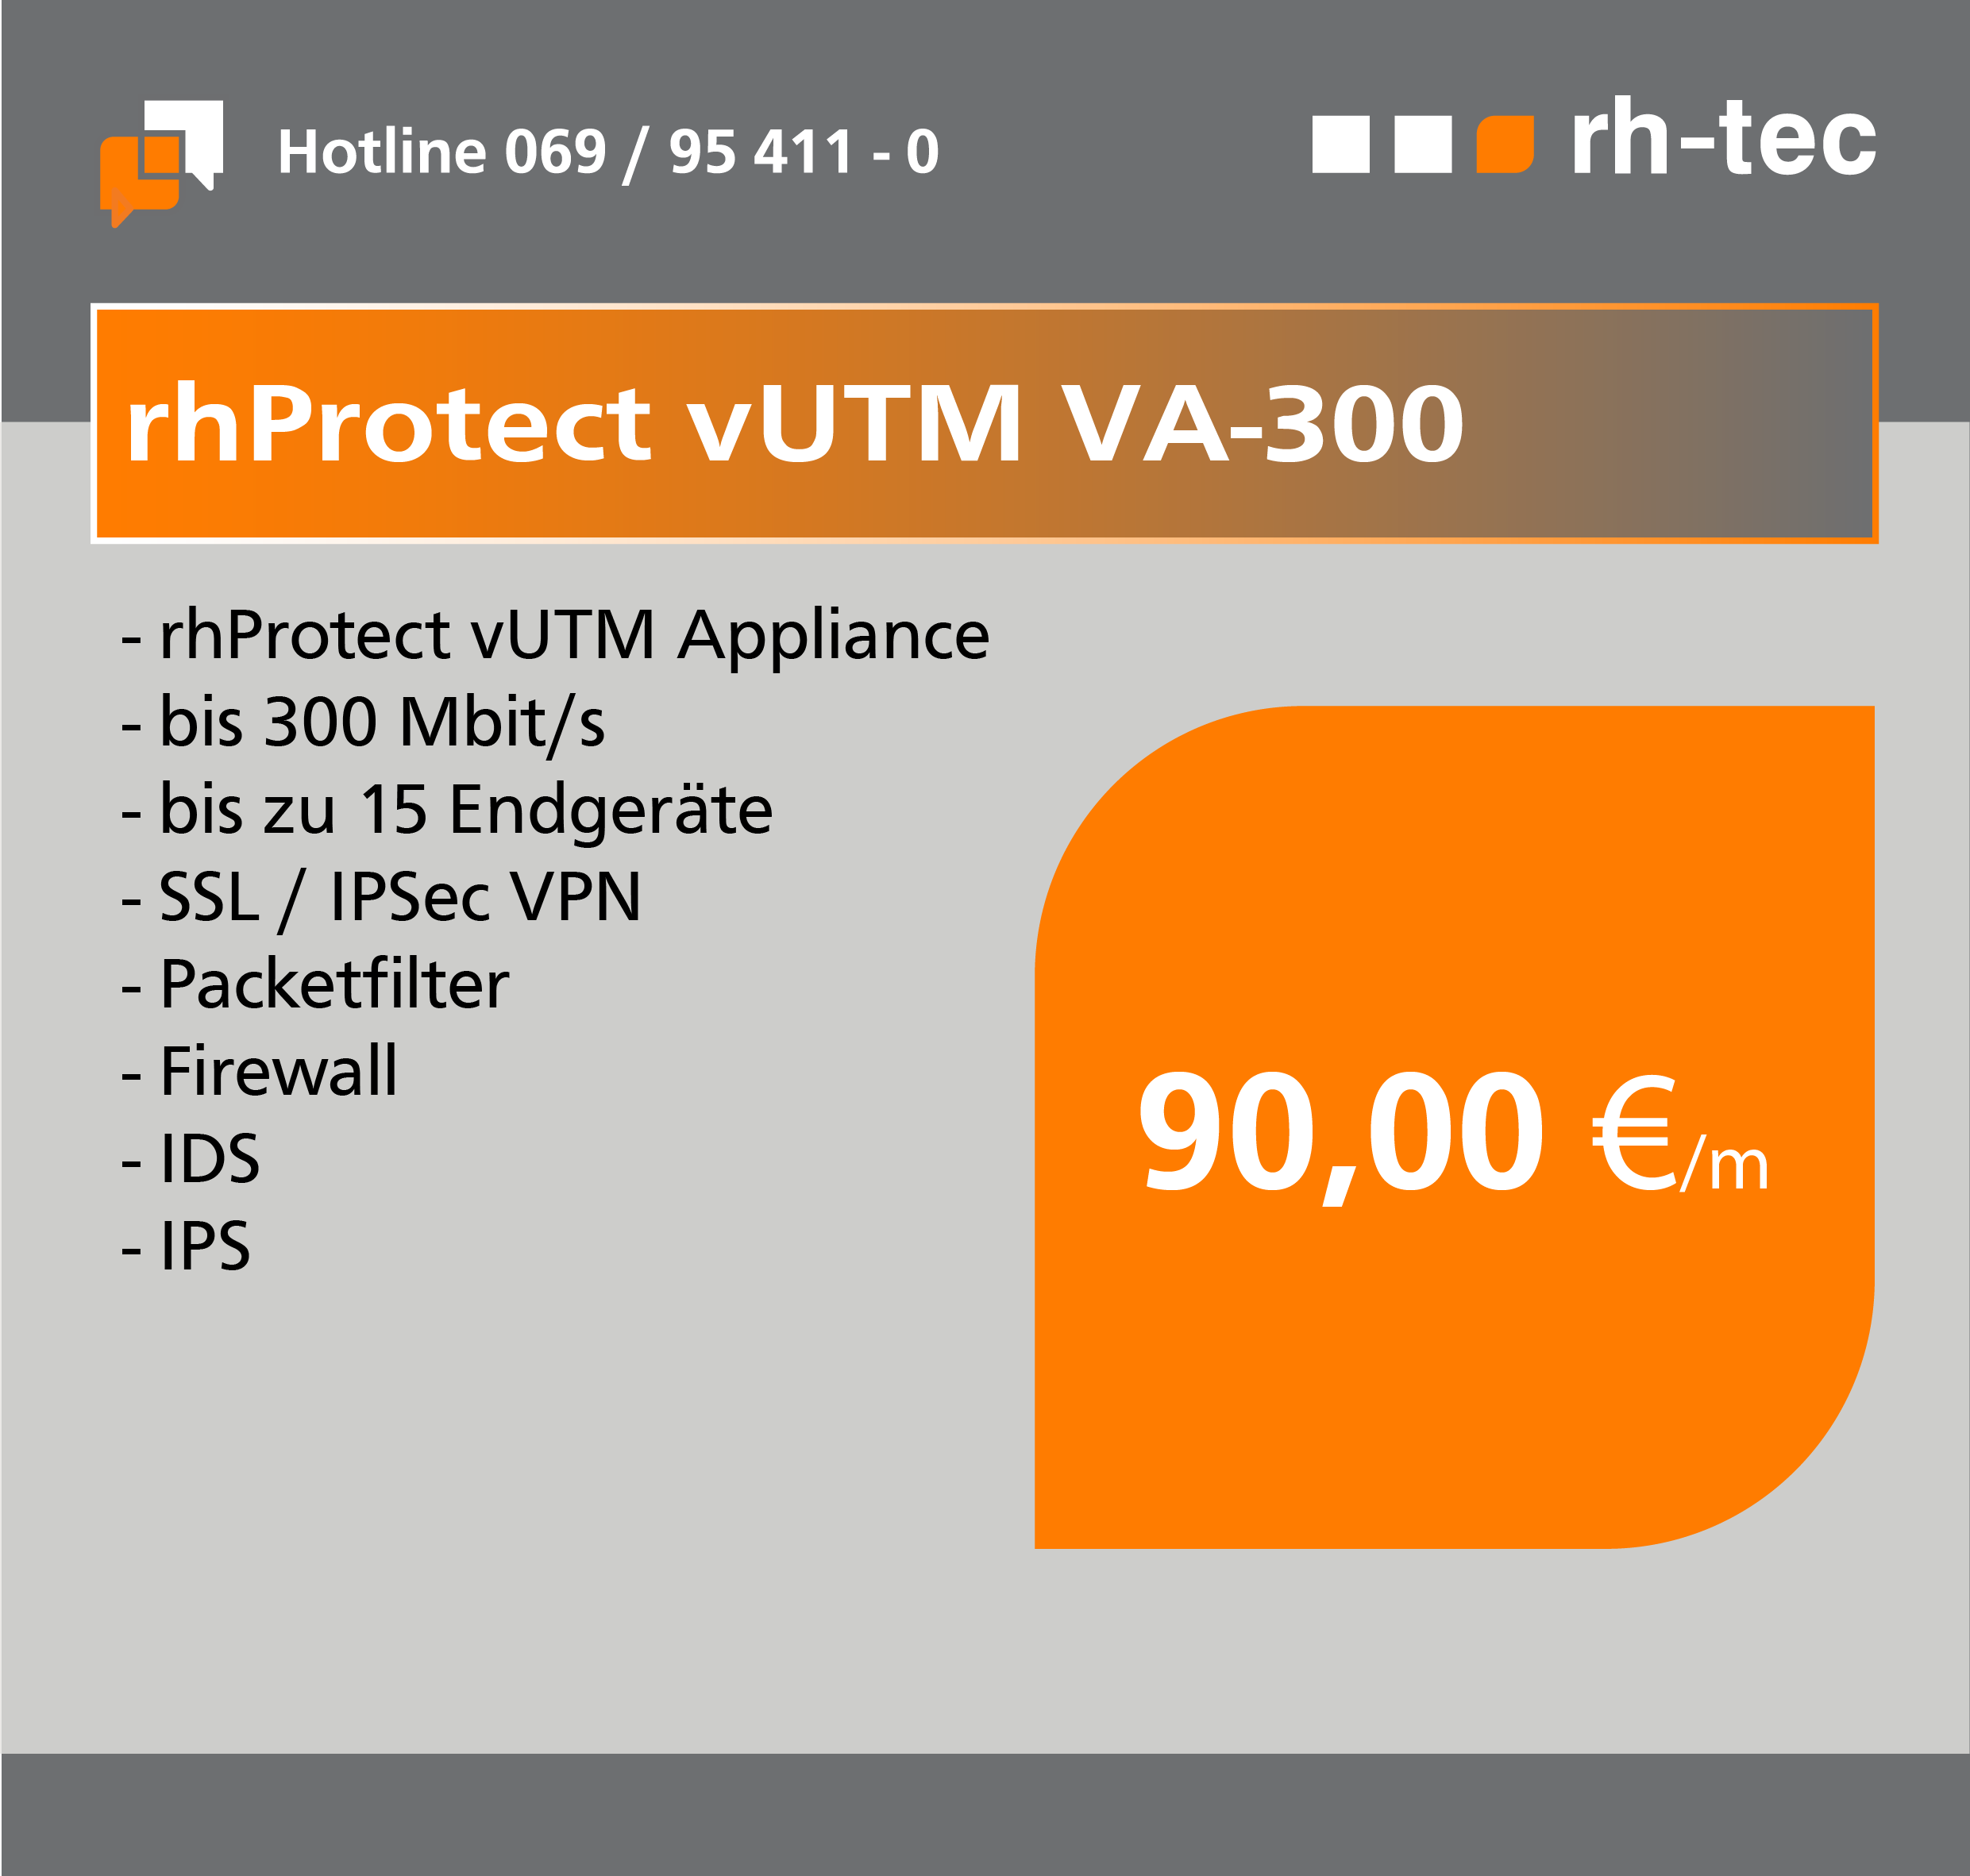 rhProtect vUTM VA-300